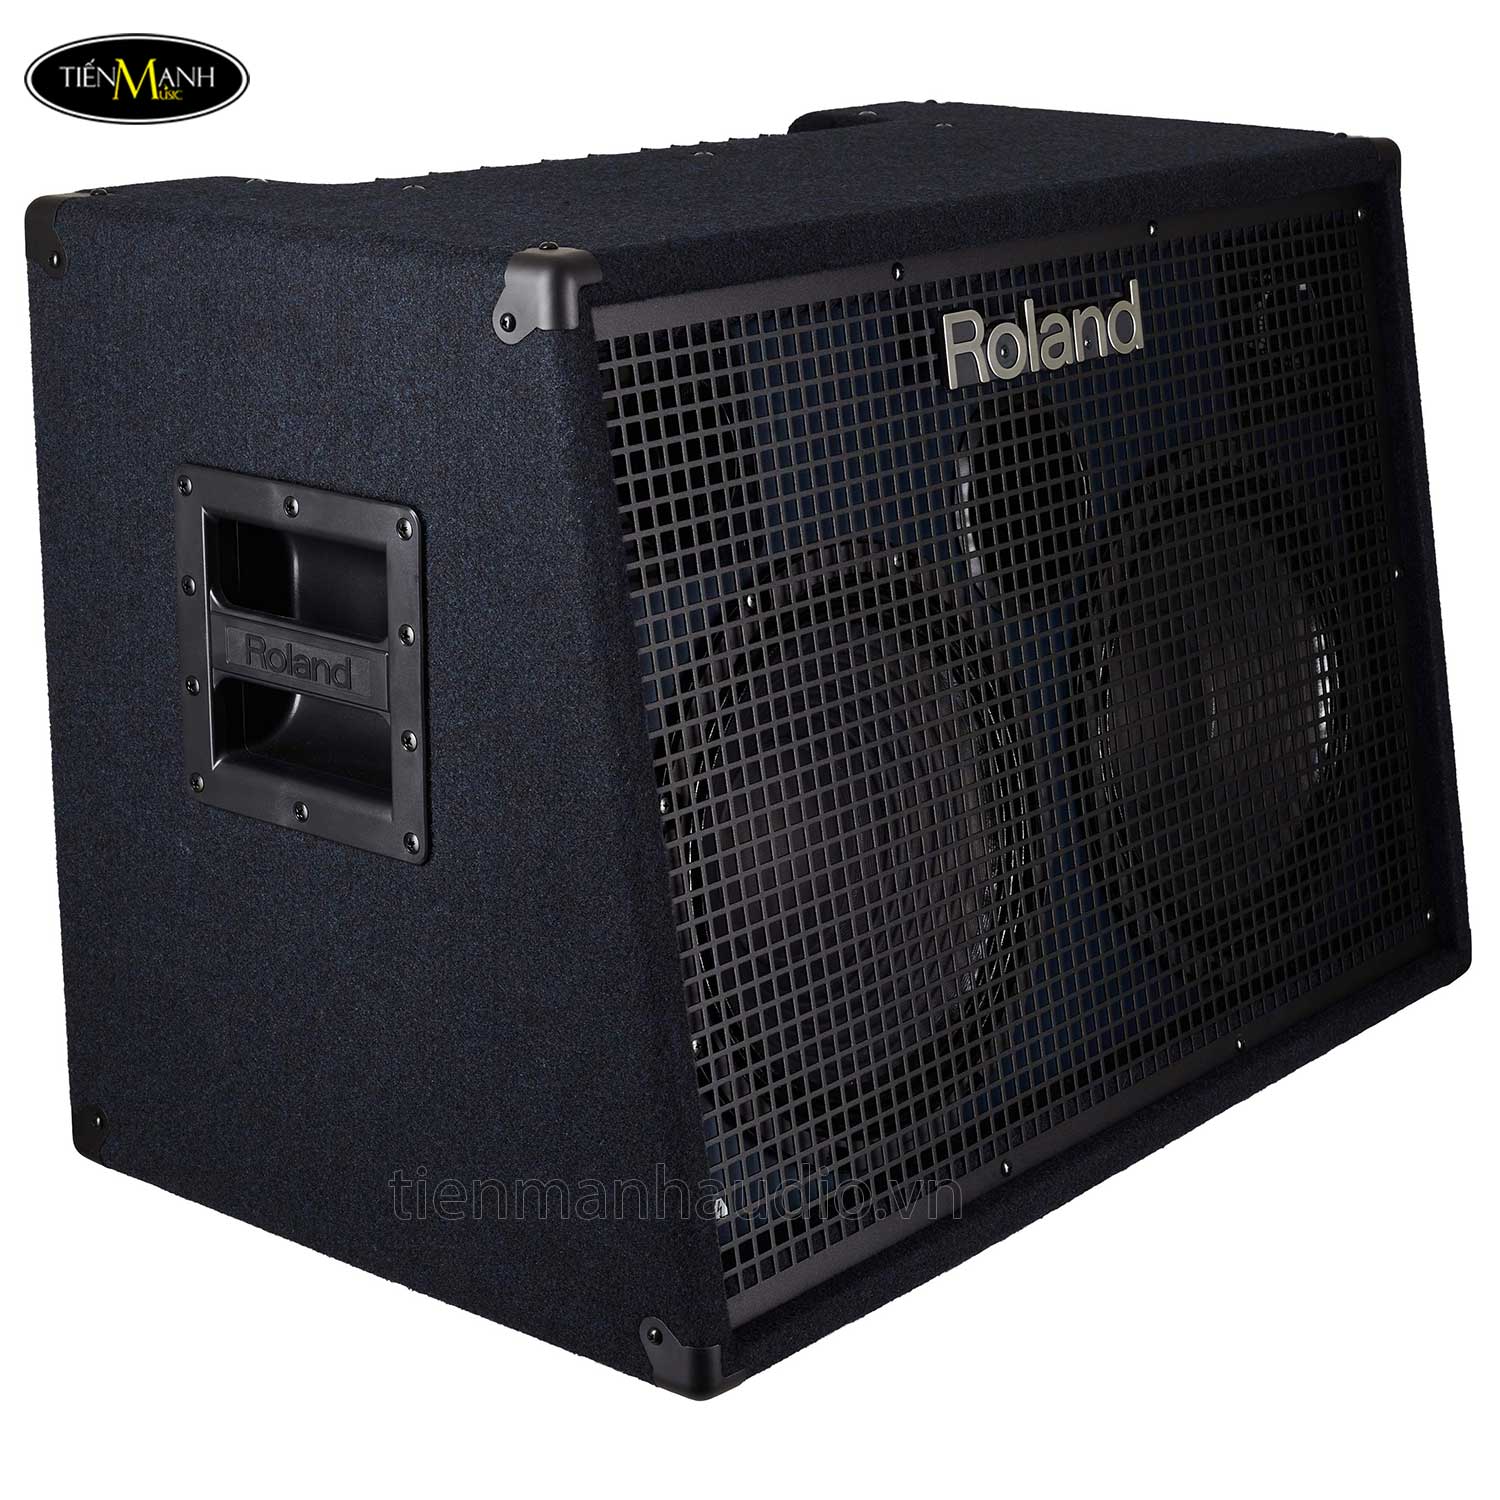 roland-kc-990-amplifier-trong-stereo-cho-nhac-cu-